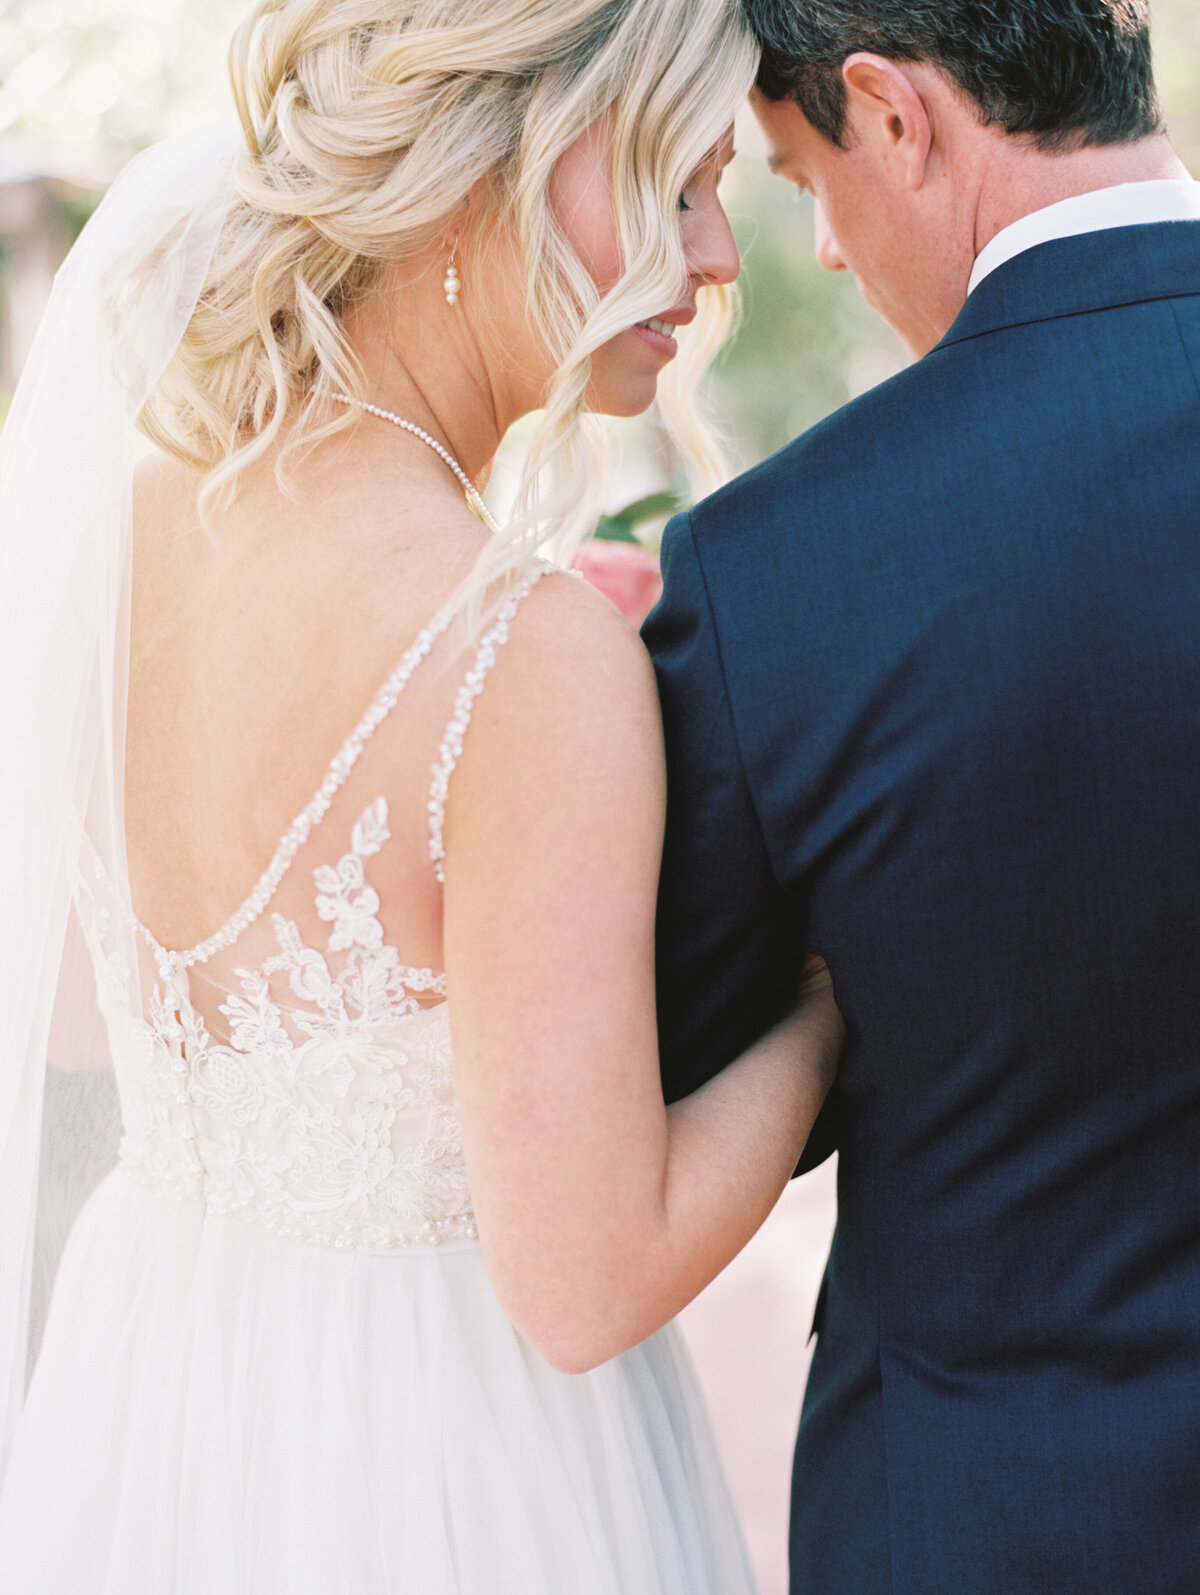 Rachel & Will | Maine Wedding Photography | Mary Claire Photography | Arizona & Destination Fine Art Wedding Photographer